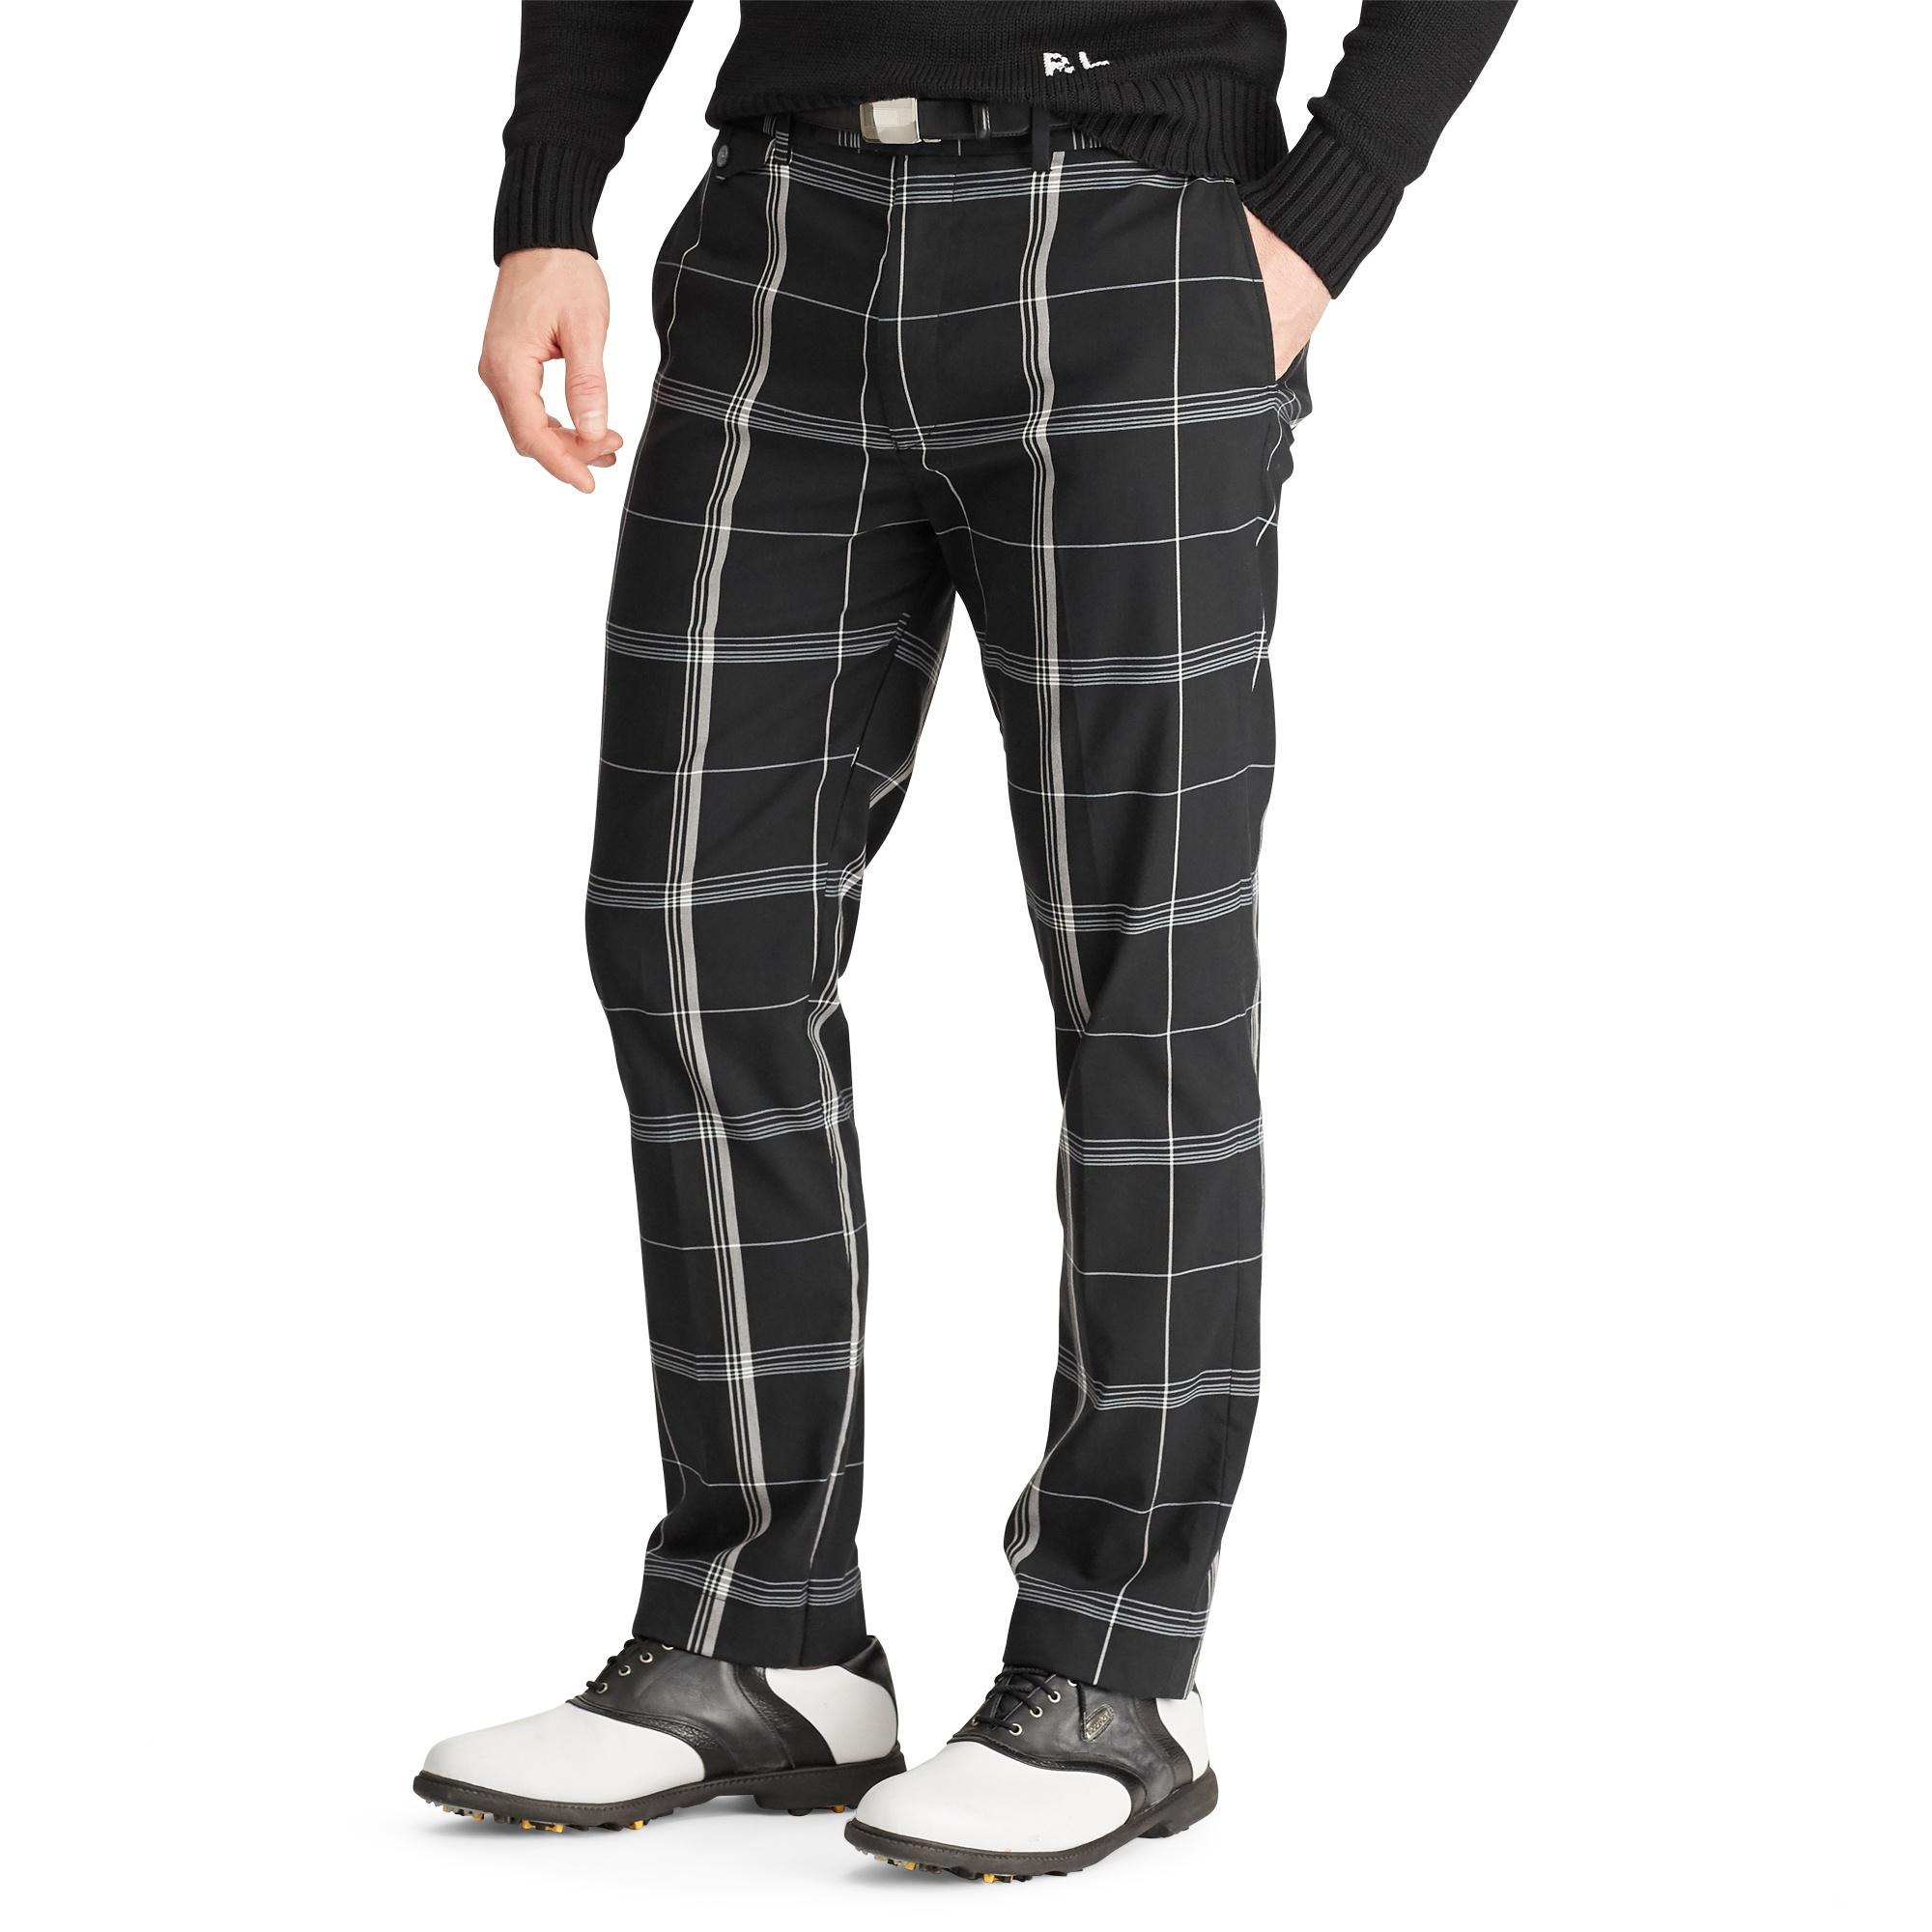 Ralph Lauren Cotton Tailored Fit Plaid Golf Pant in Black for Men - Lyst